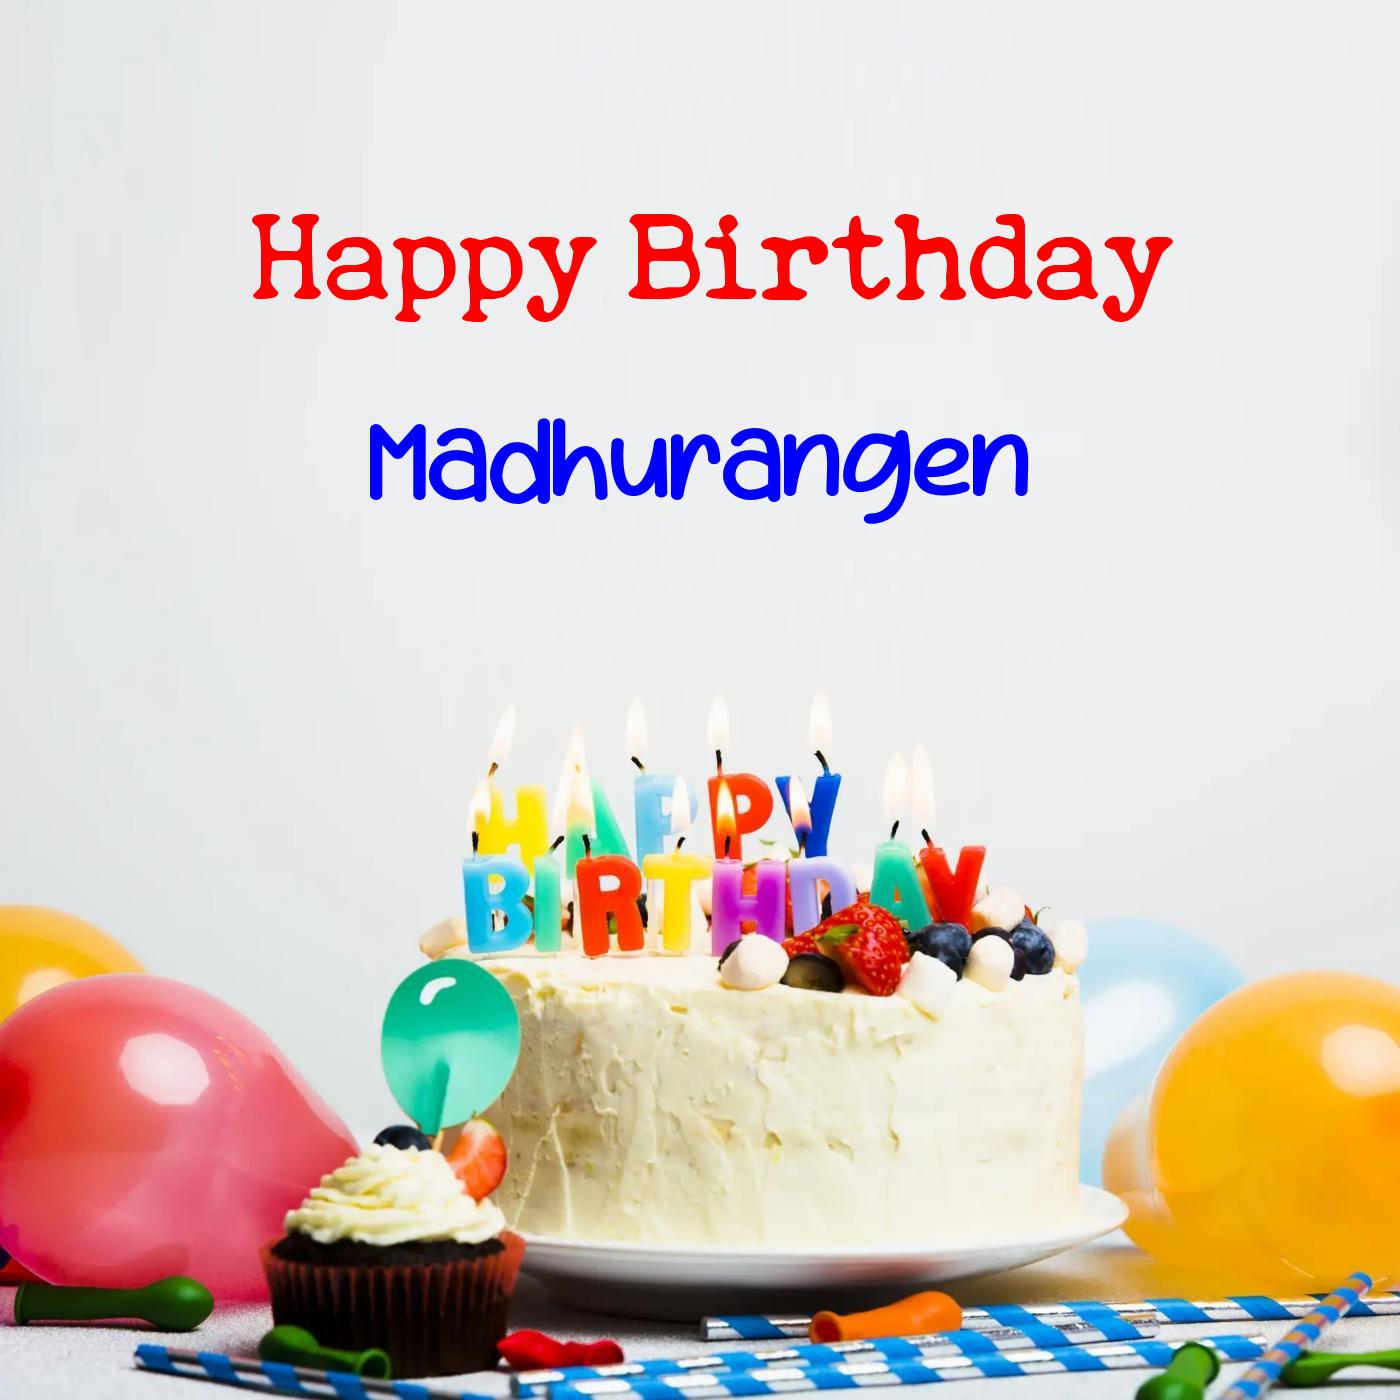 Happy Birthday Madhurangen Cake Balloons Card